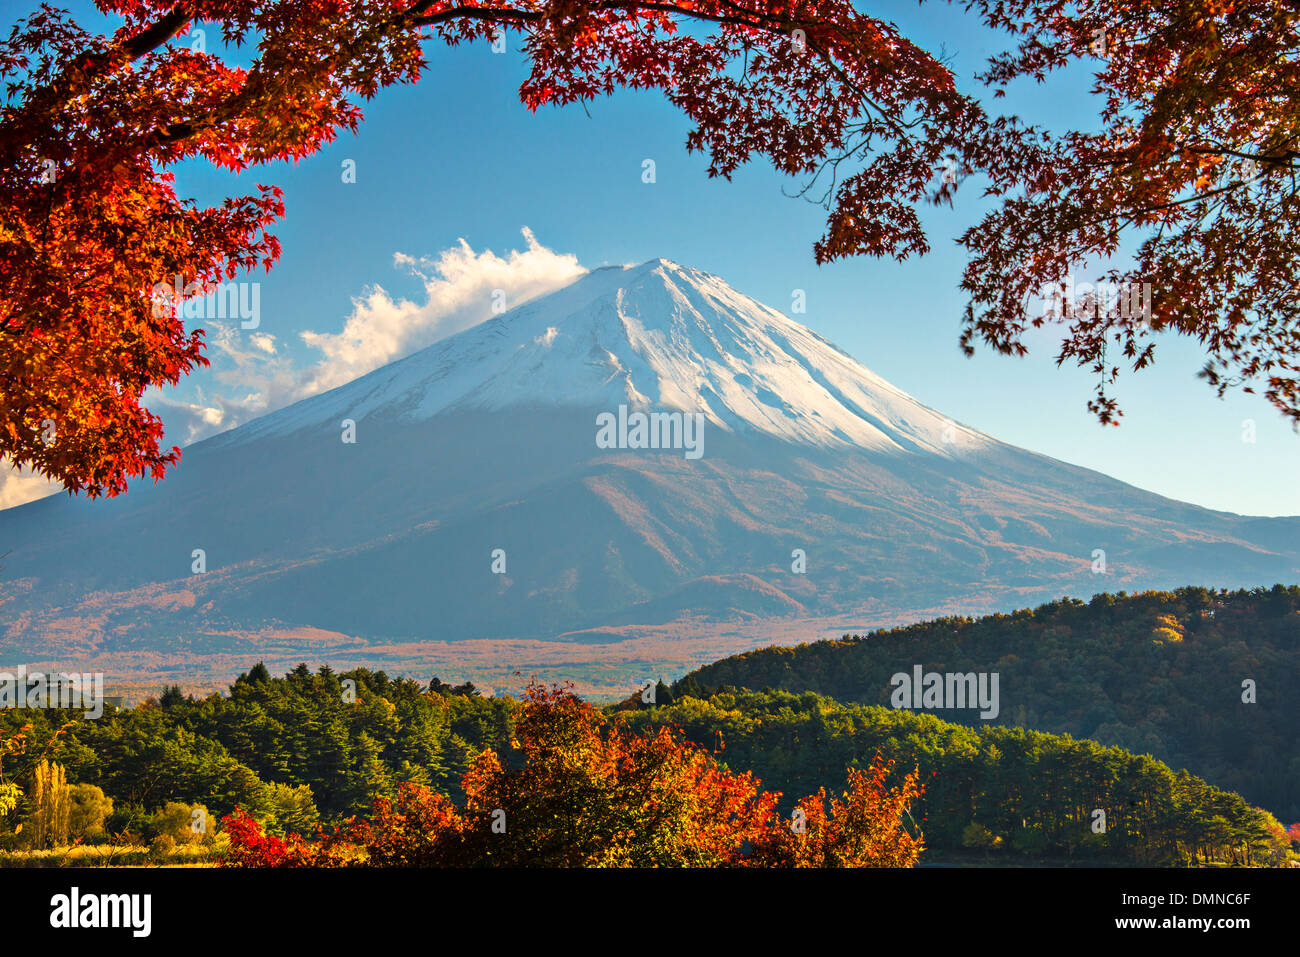 Mt. Fuji with fall Foliage in Japan. Stock Photo